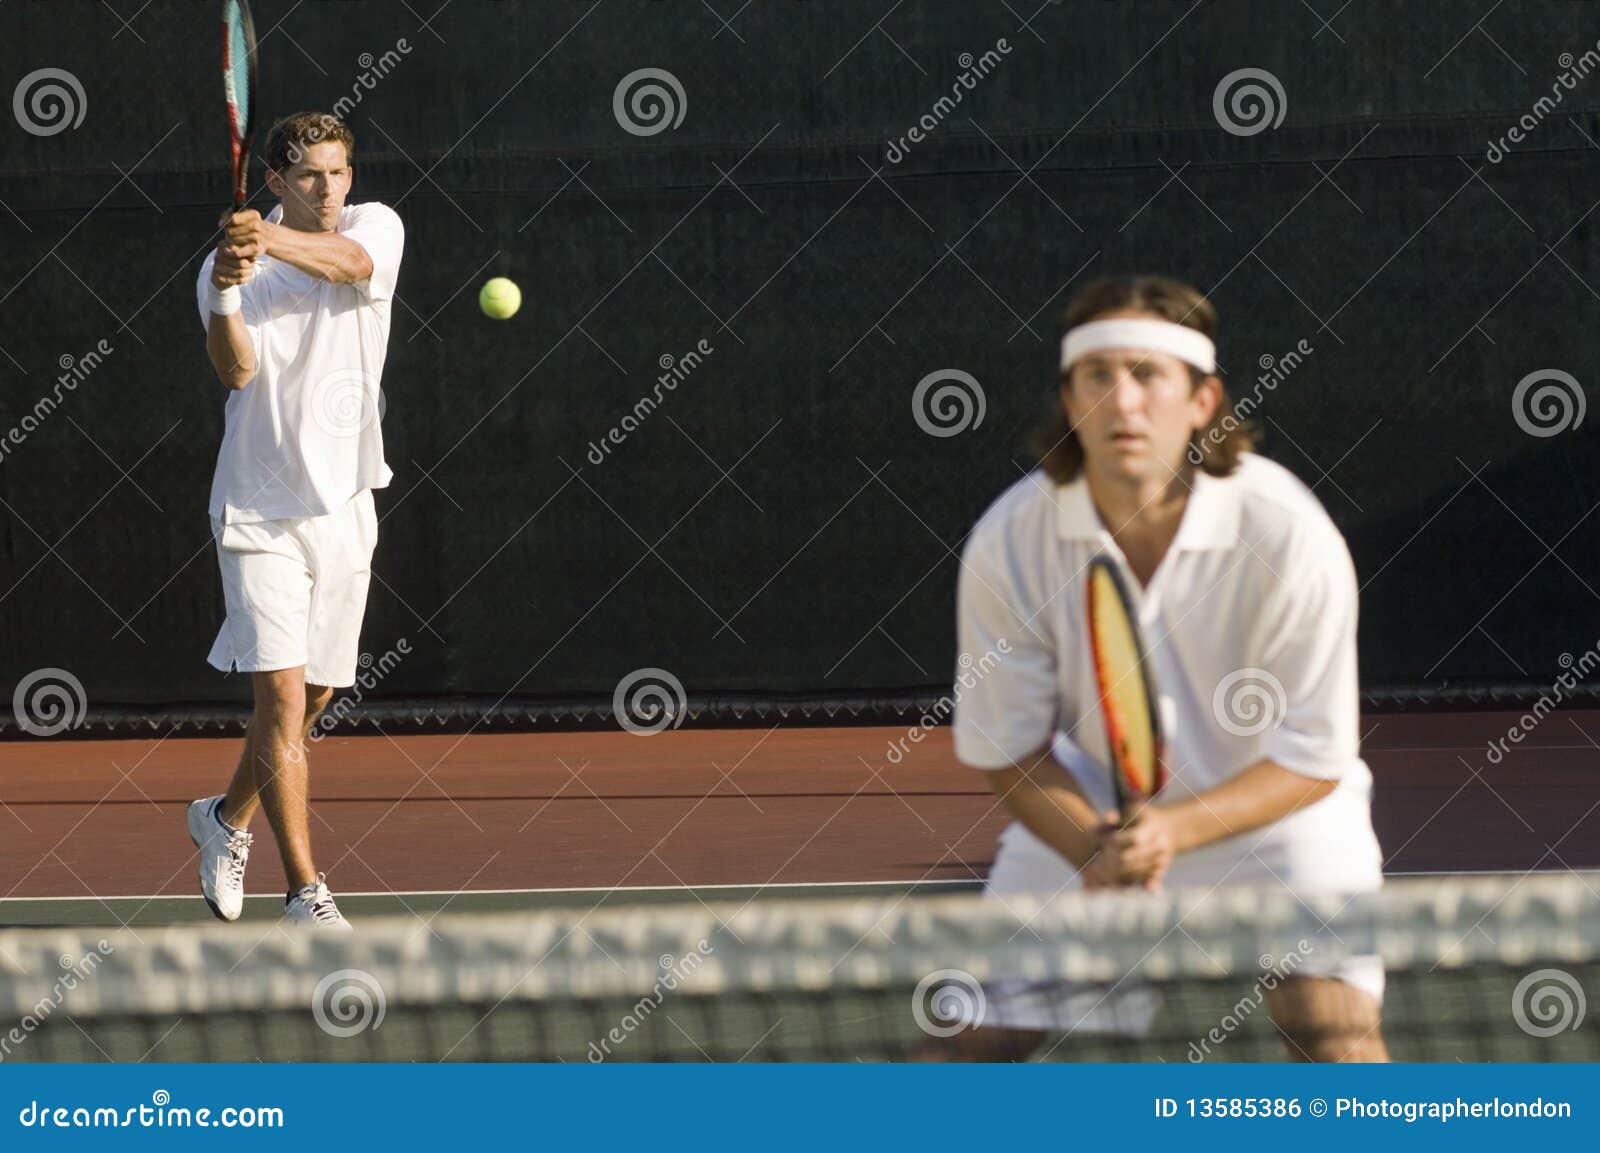 tennis player hitting backhand